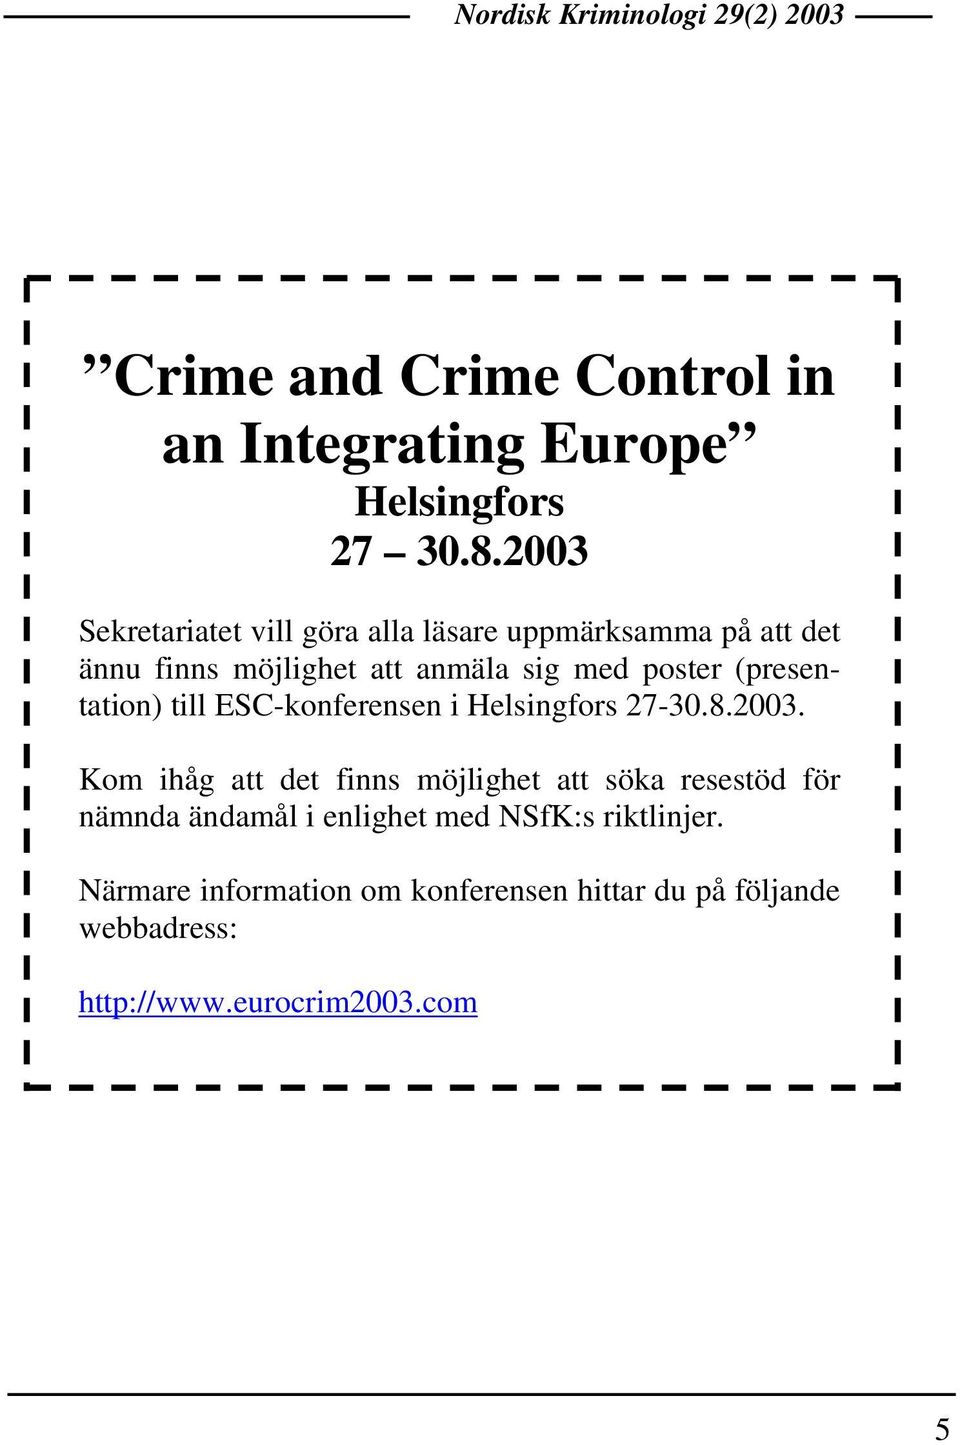 (presentation) till ESC-konferensen i Helsingfors 27-30.8.2003.